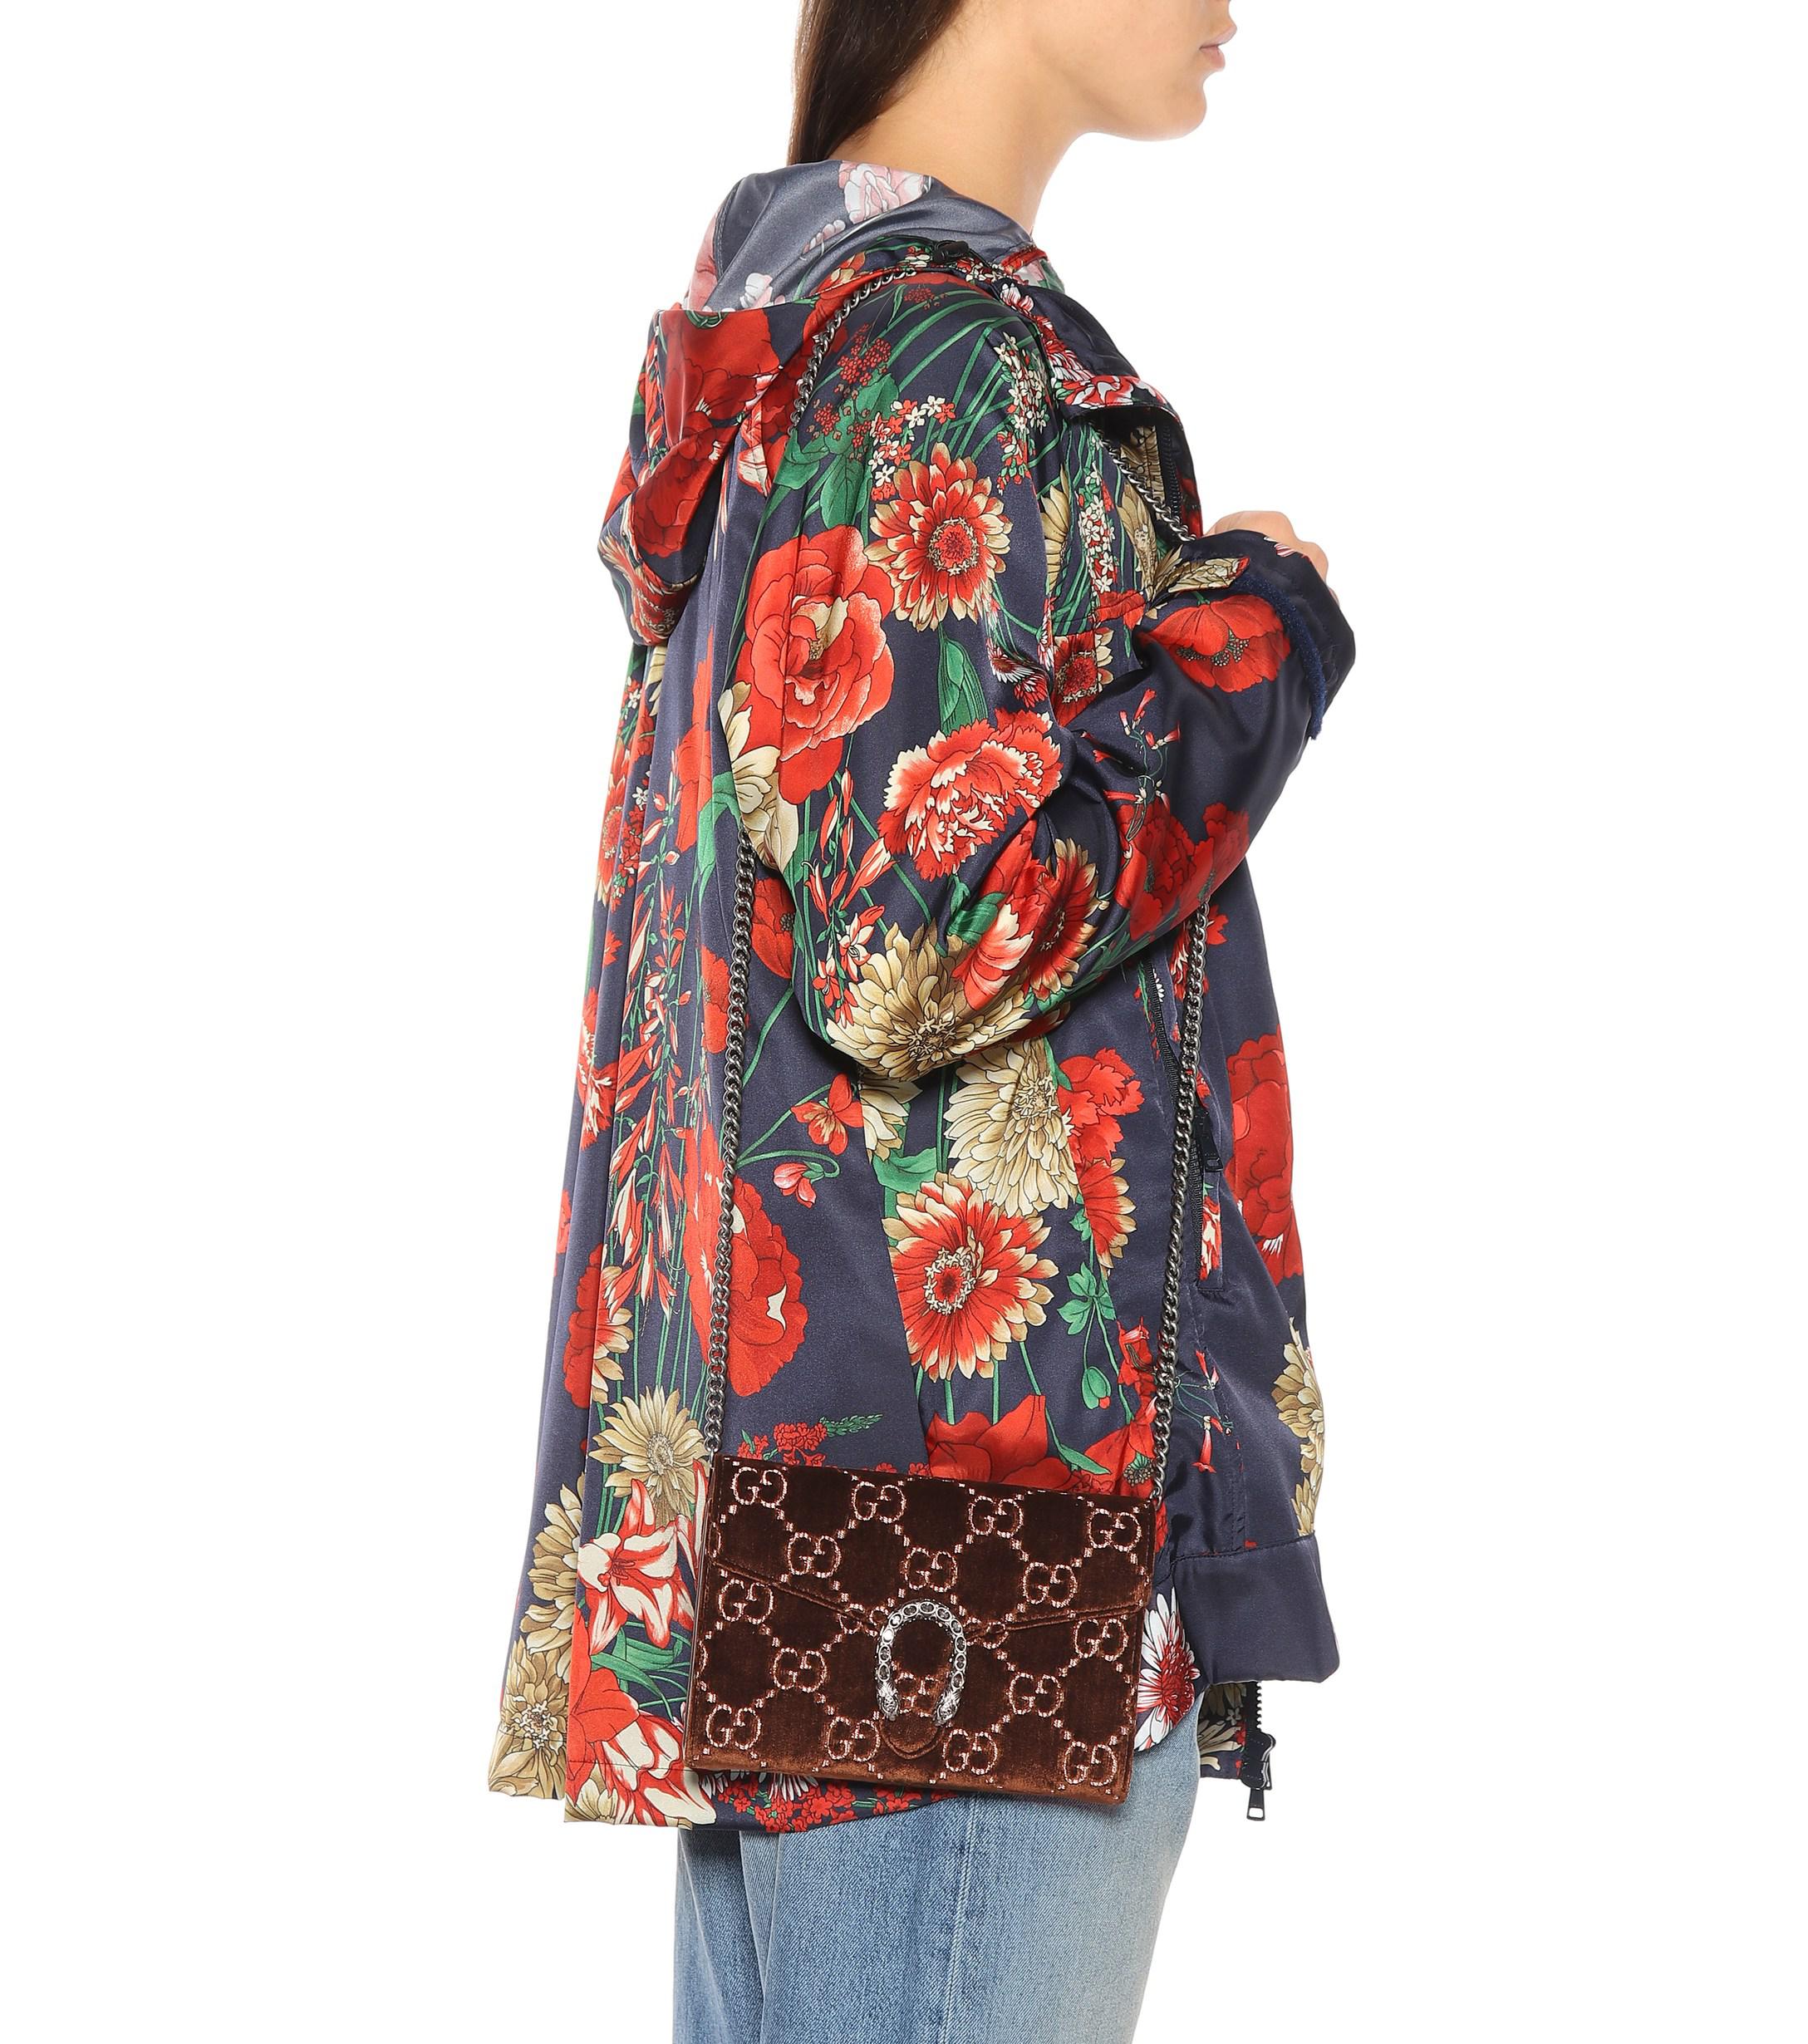 Gucci Dionysus GG Mini Velvet Shoulder Bag in Brown - Lyst